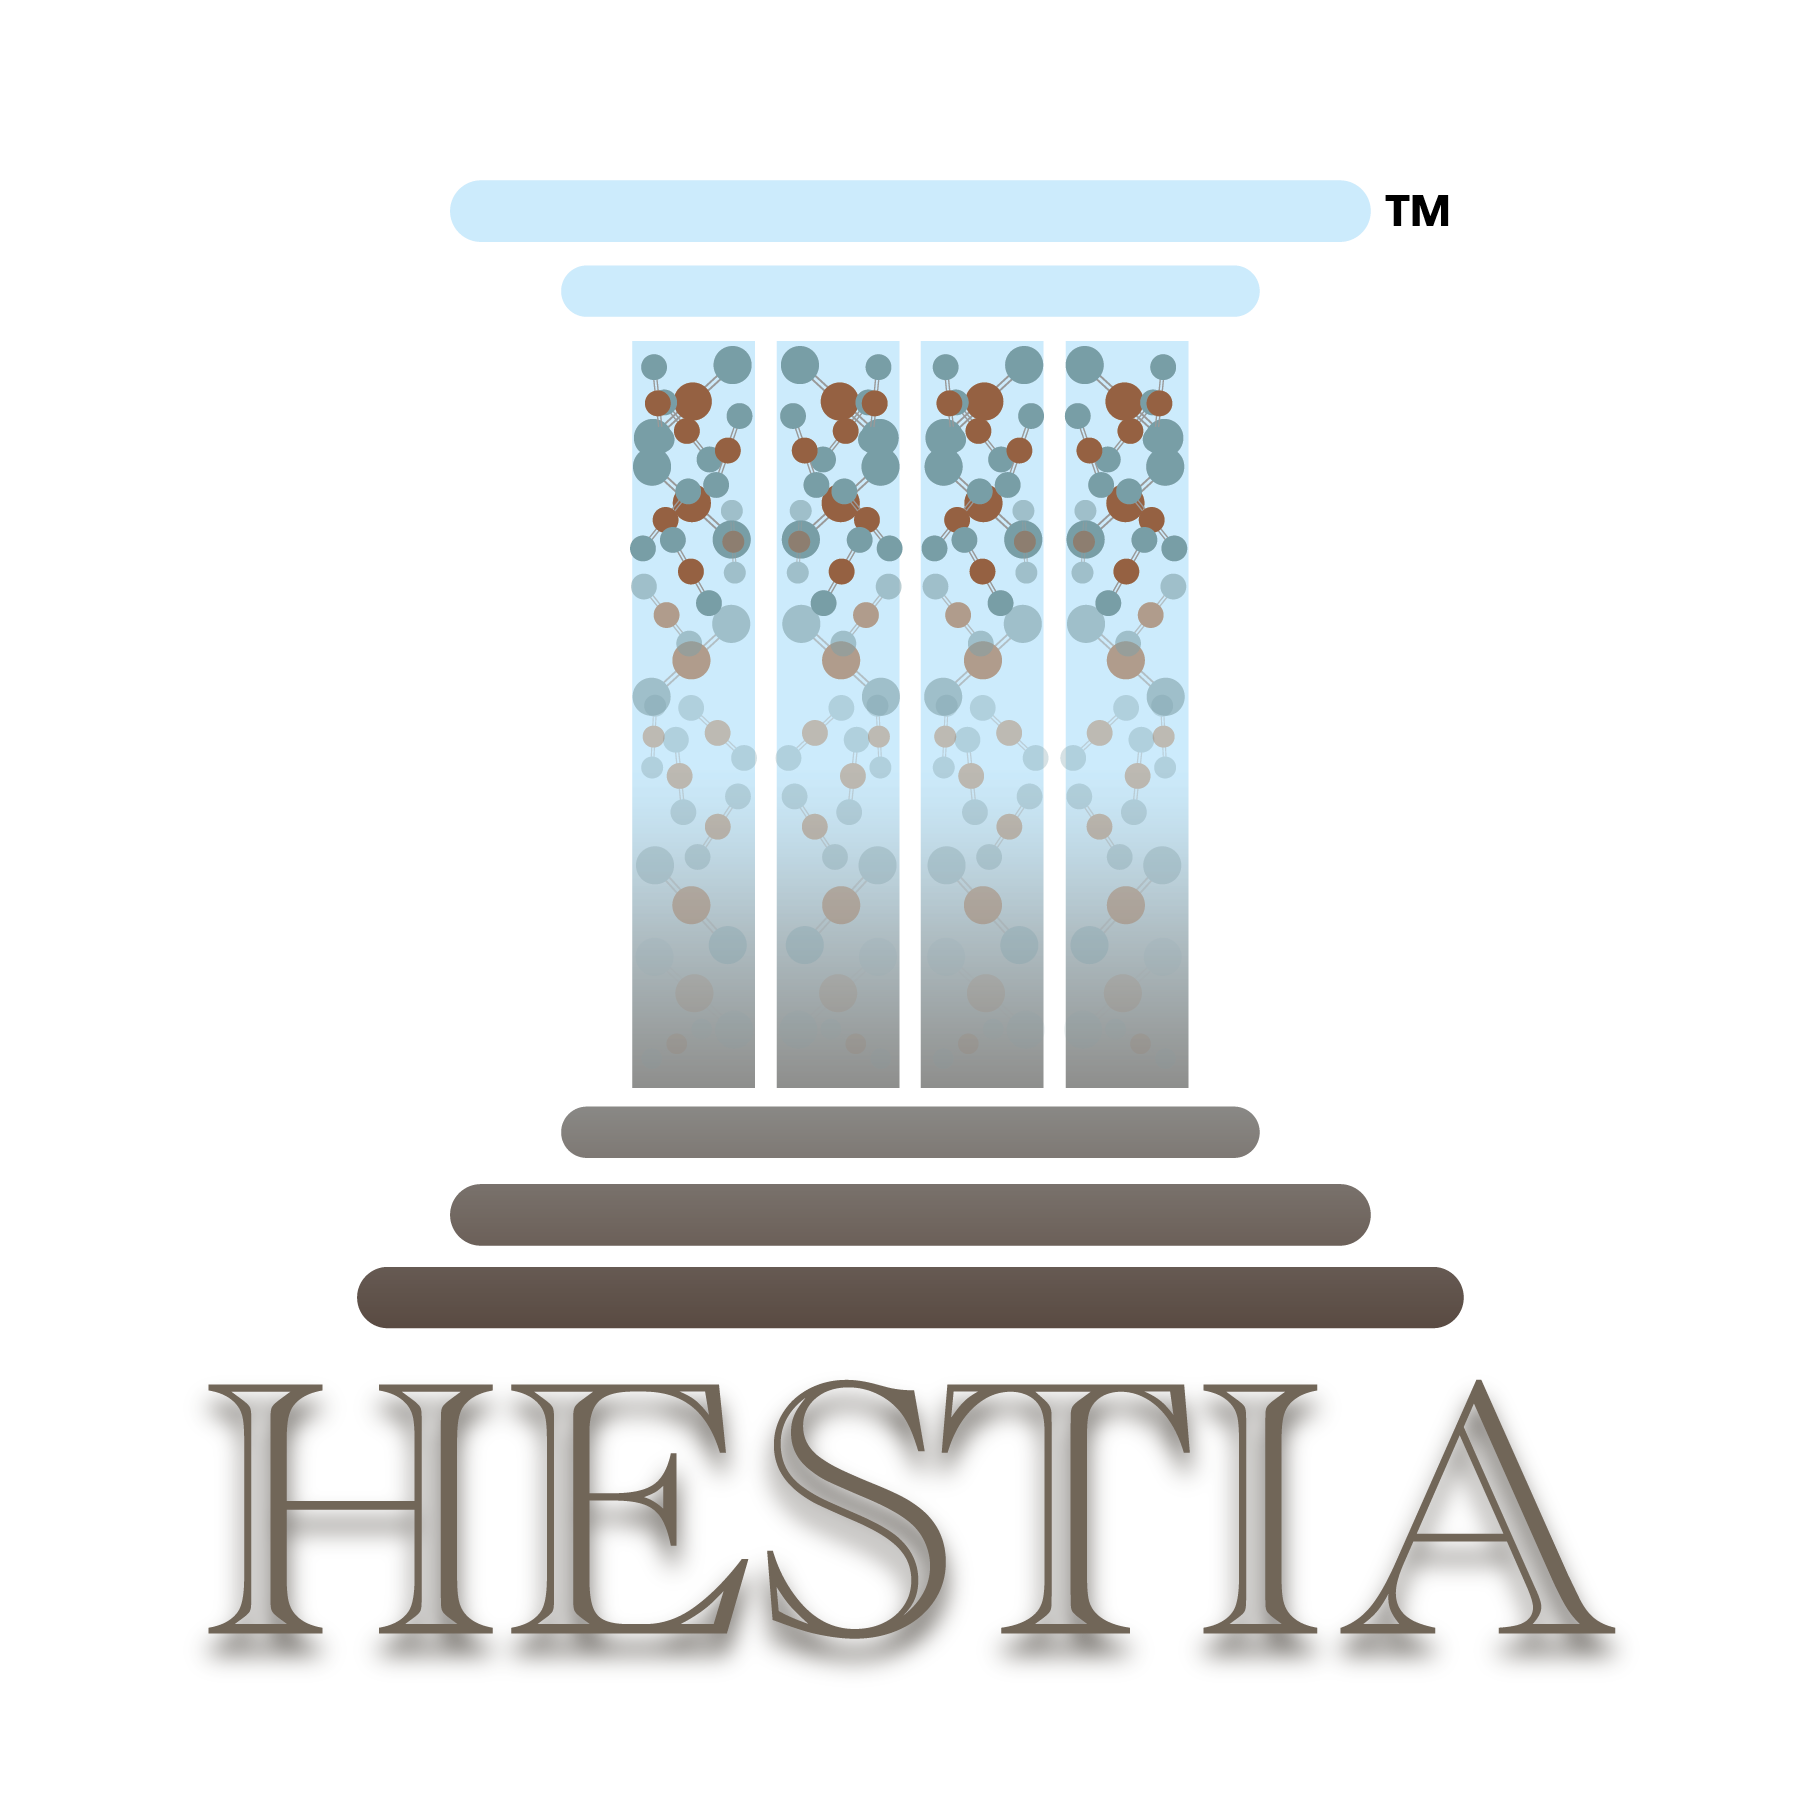 ARPA-E HESTIA Program Graphic